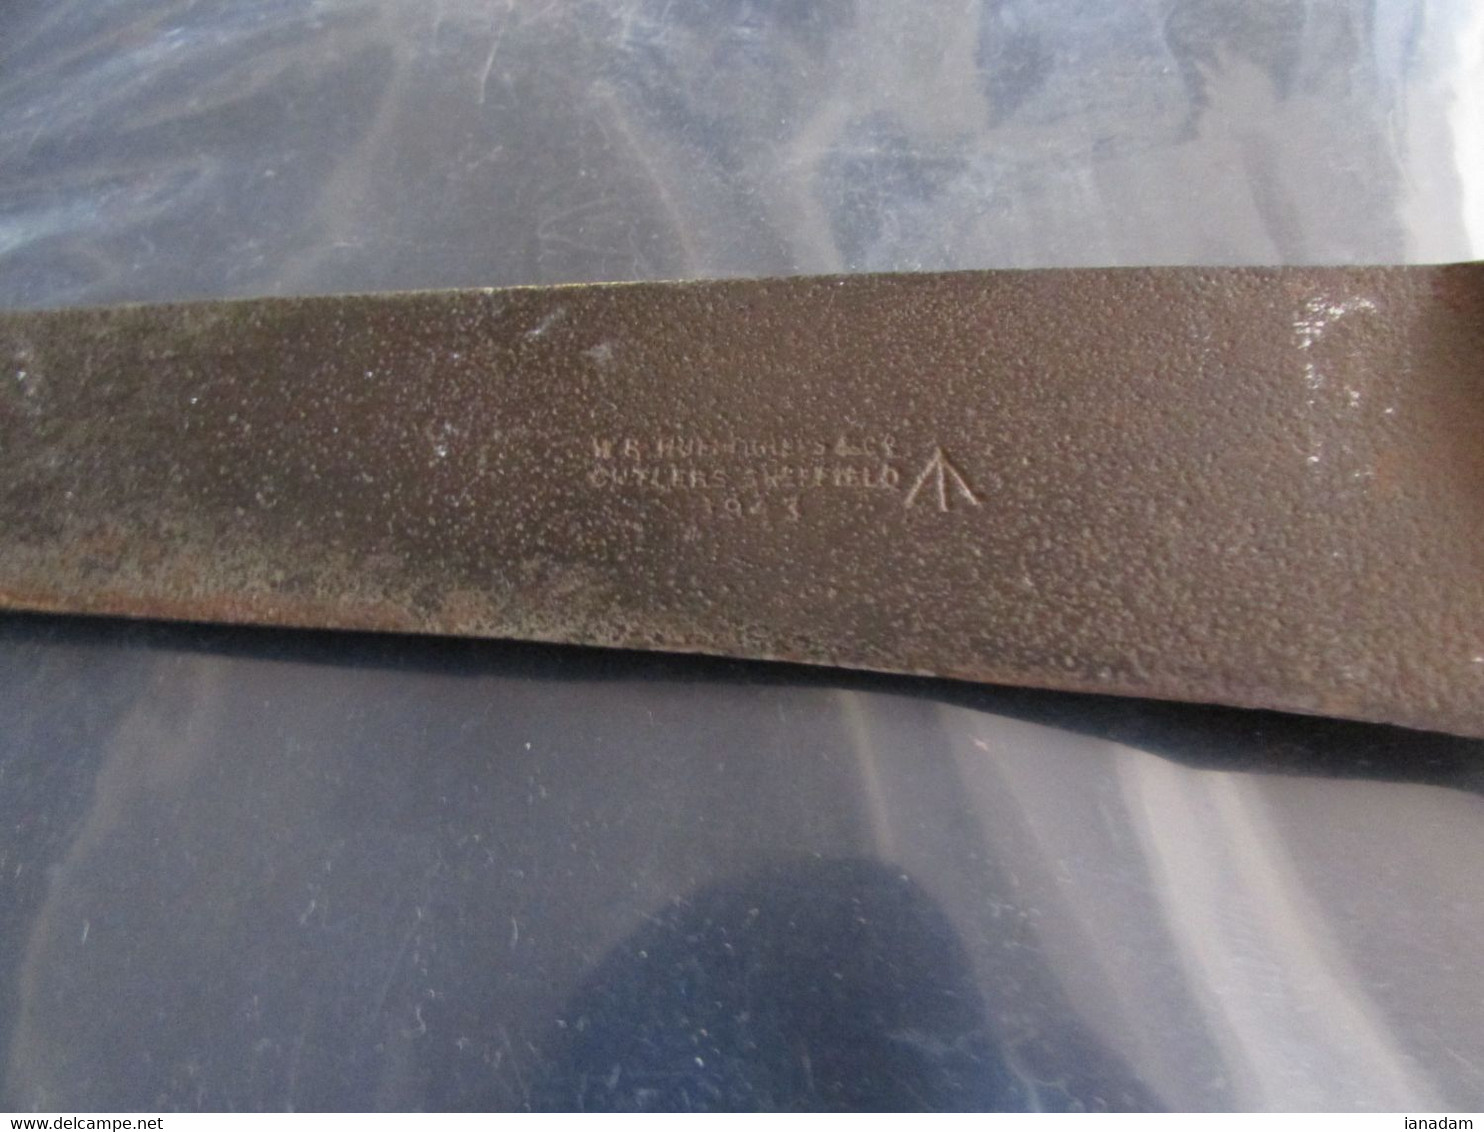 WW2 Dated Broad Arrow British Knife - Knives/Swords